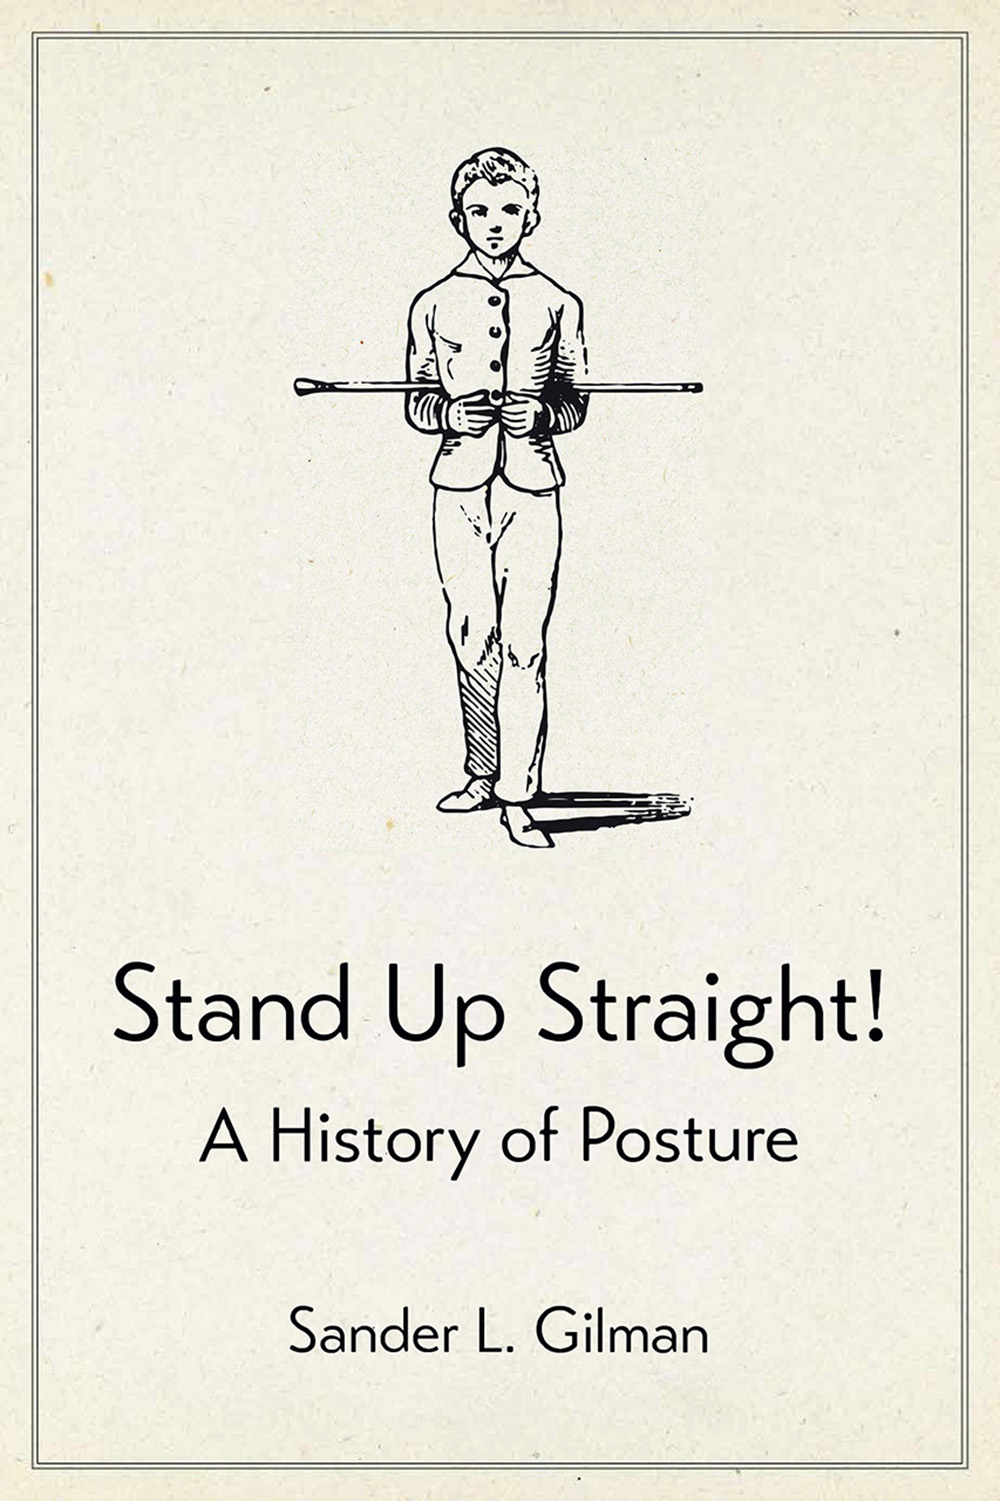 Sander L. Gilman, “Stand Up Straight!” (University of Chicago Press, 2018).